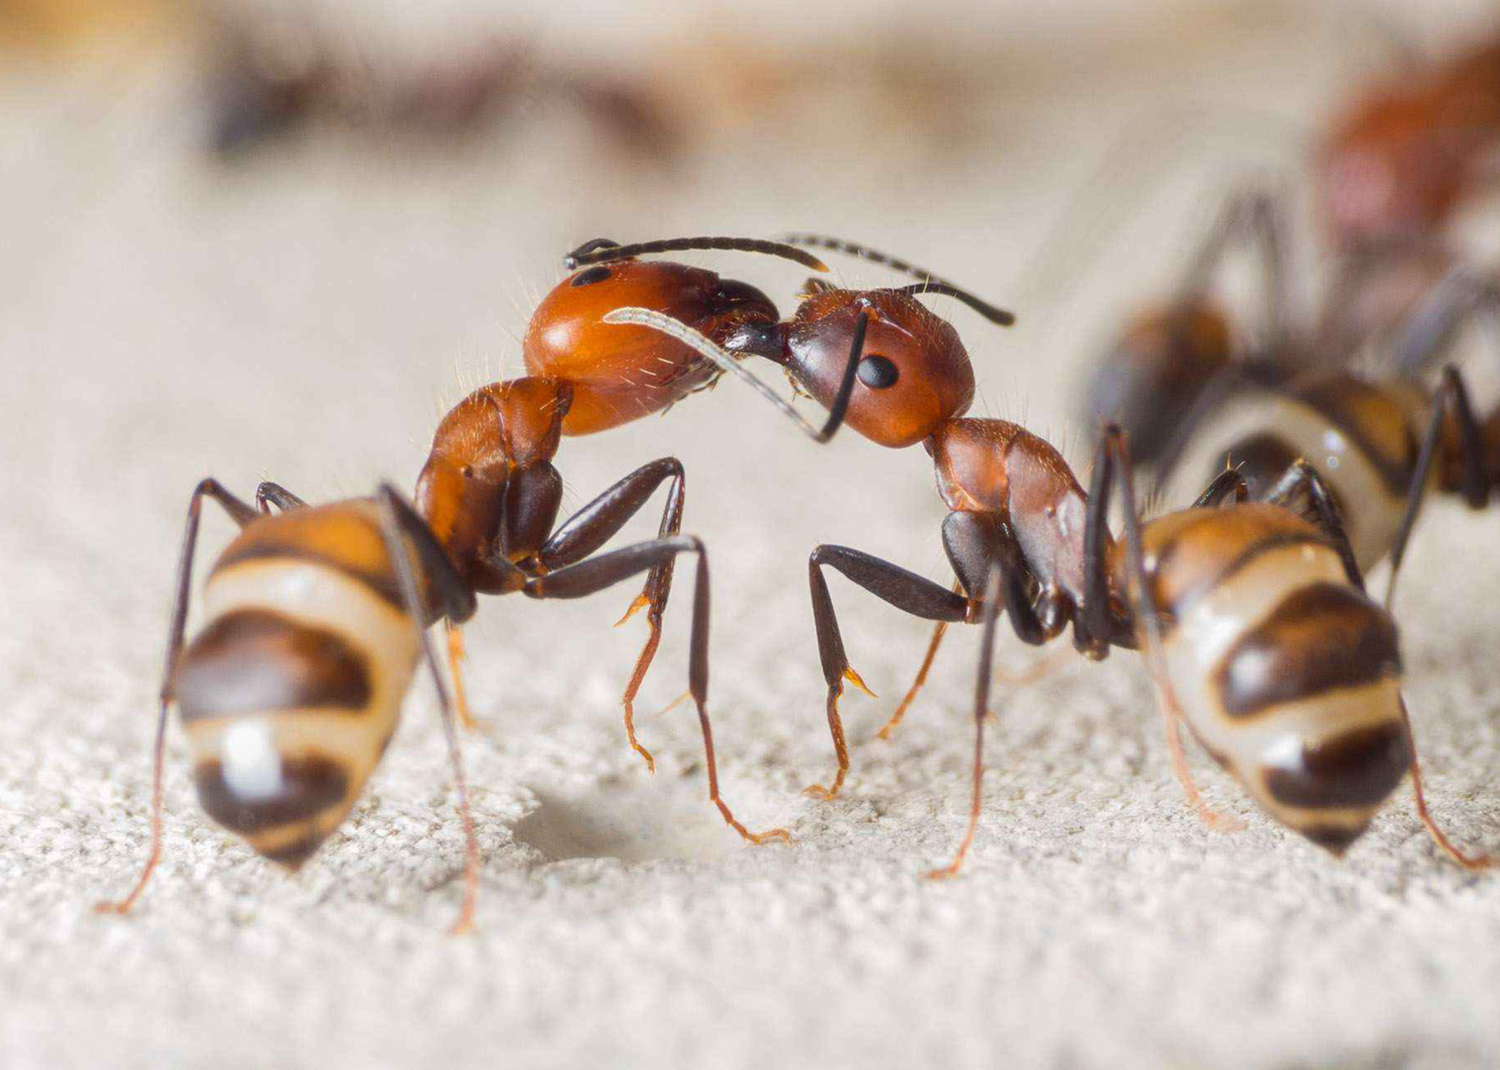 Camponotus nicobarensis (Никобаренсис)